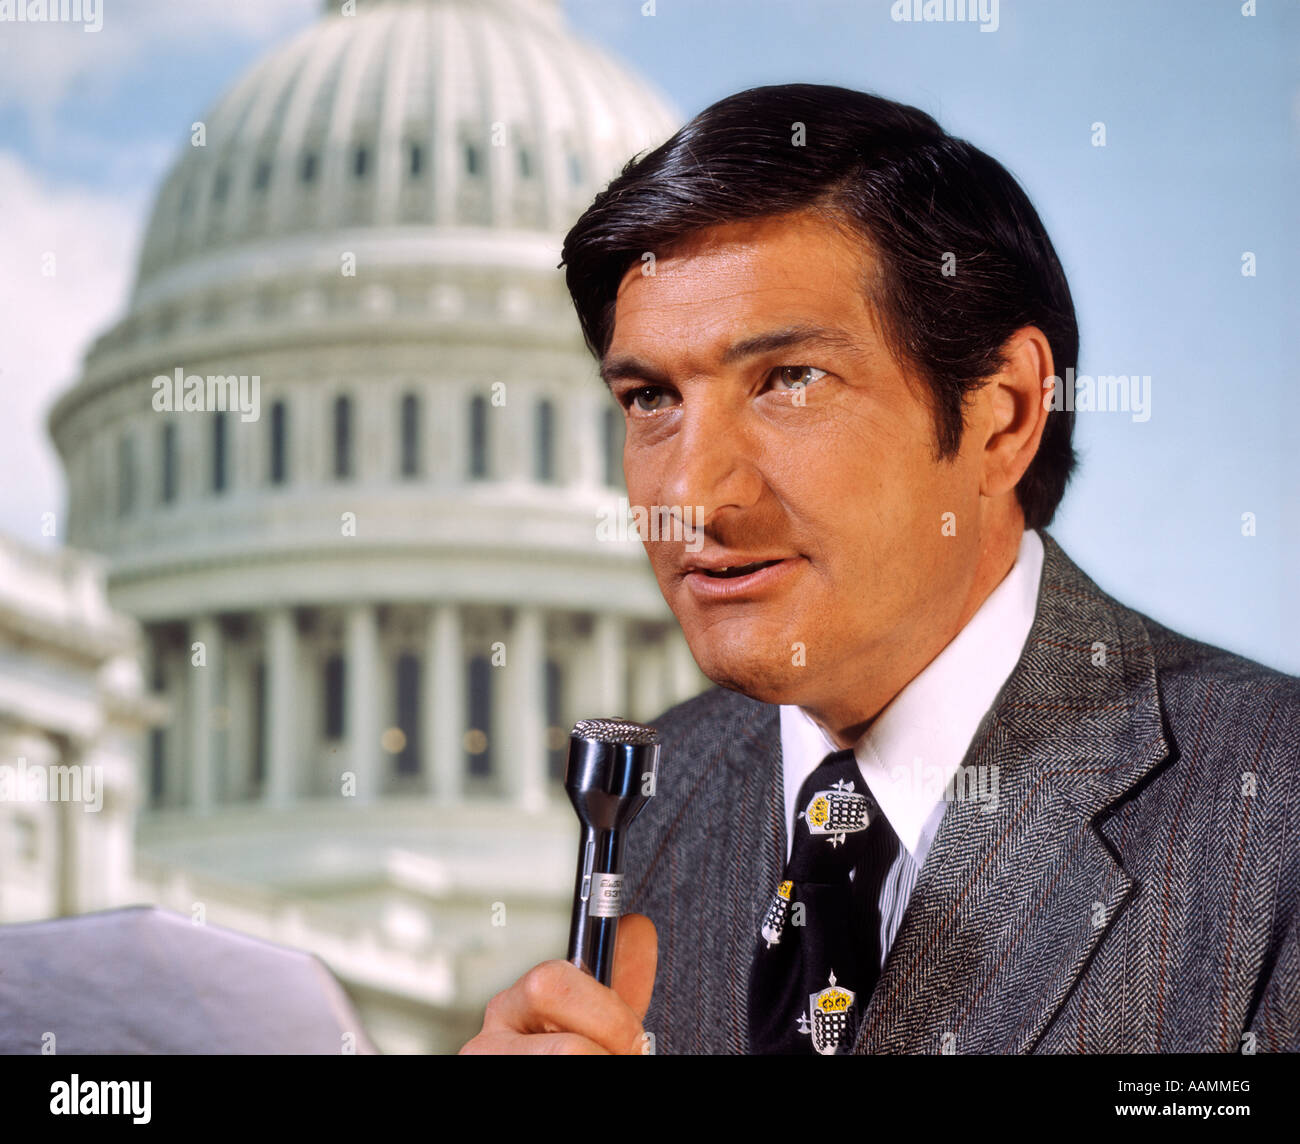 1970 1970S NEWS REPORTER CAPITOL HAUPTSTADT WASHINGTON DC DC SCHWARZES HAAR SPORT JACKE MIKROFON MIC RETRO Stockfoto